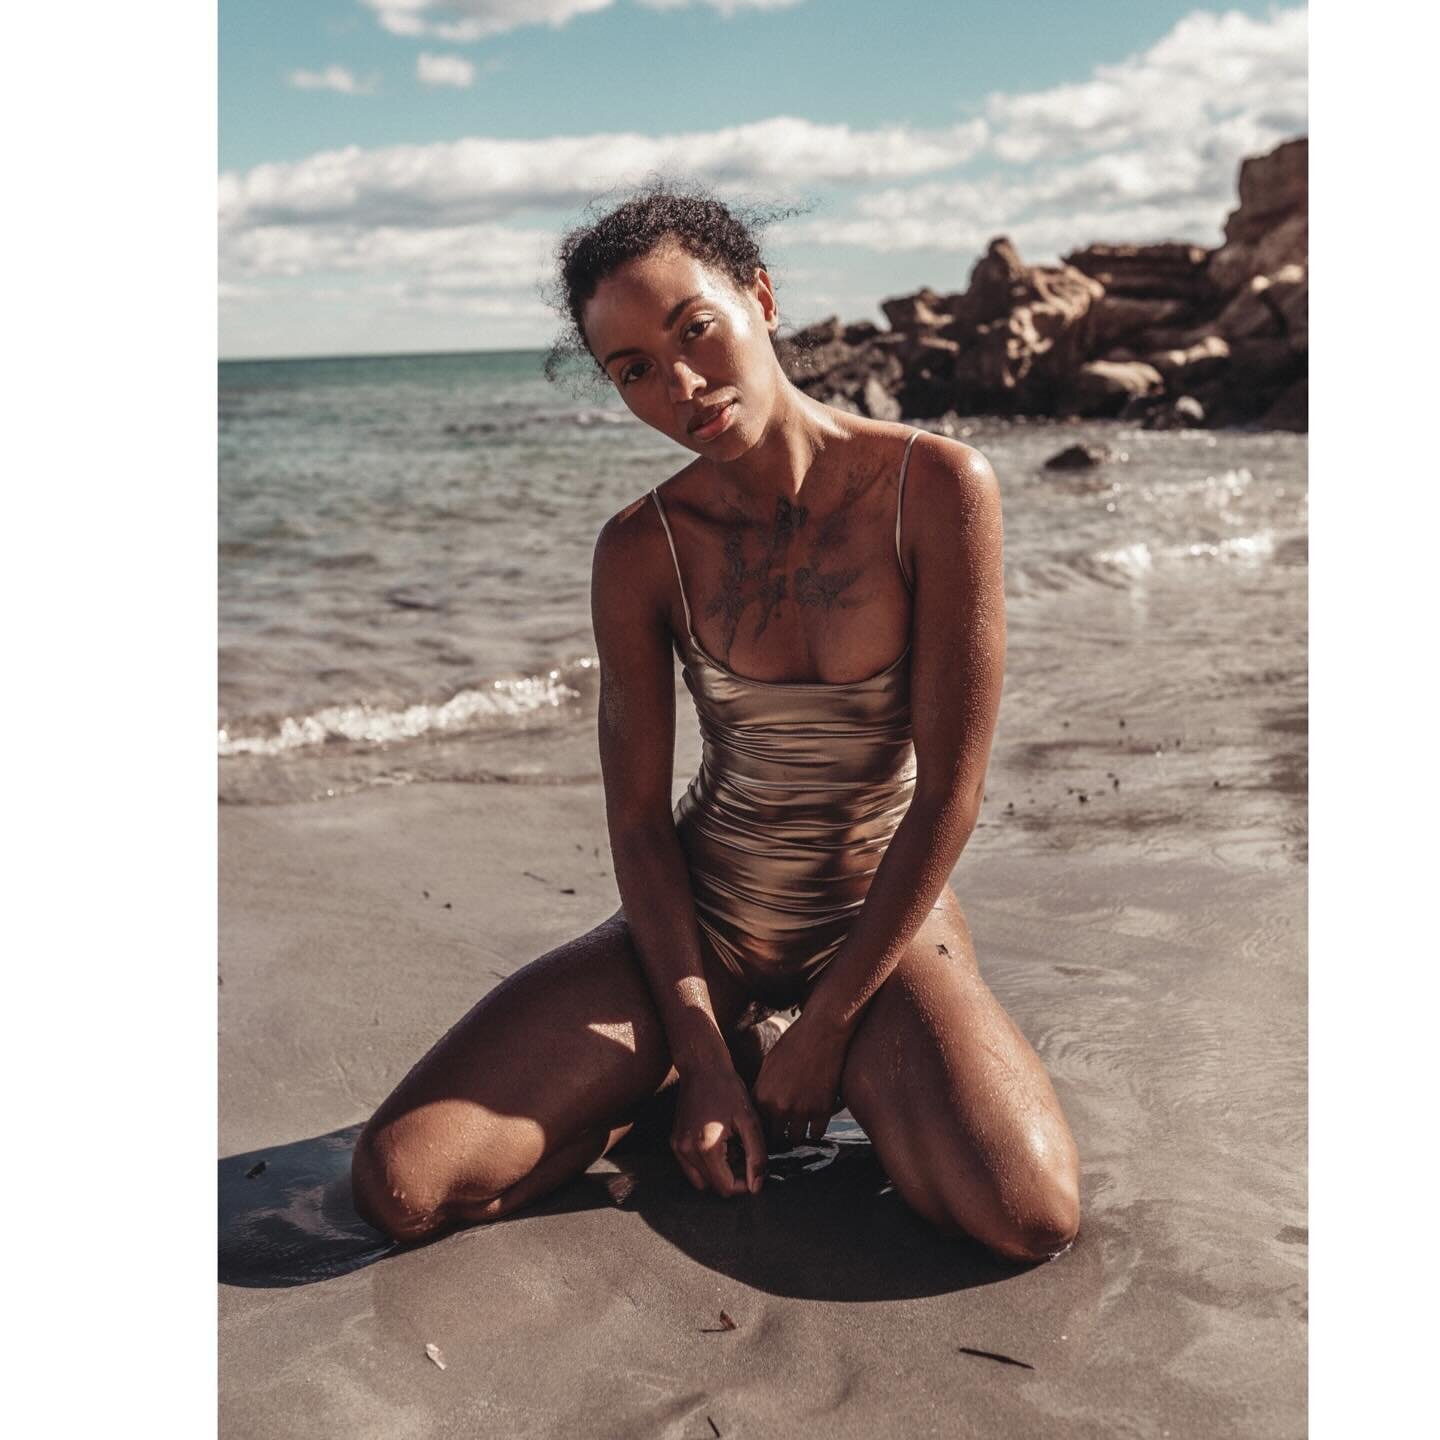 sexy, cool, originell also in gold &hellip; this natural beautiful girl JULIETTE ✨
@mbmodelmanagement 

#bikinimodel #swimwear #bodywear #goldbikini #modelshoot  #underwearmodel #becool #becrazy #bedifferent #beunique #beachstyle #silverboots #fashio